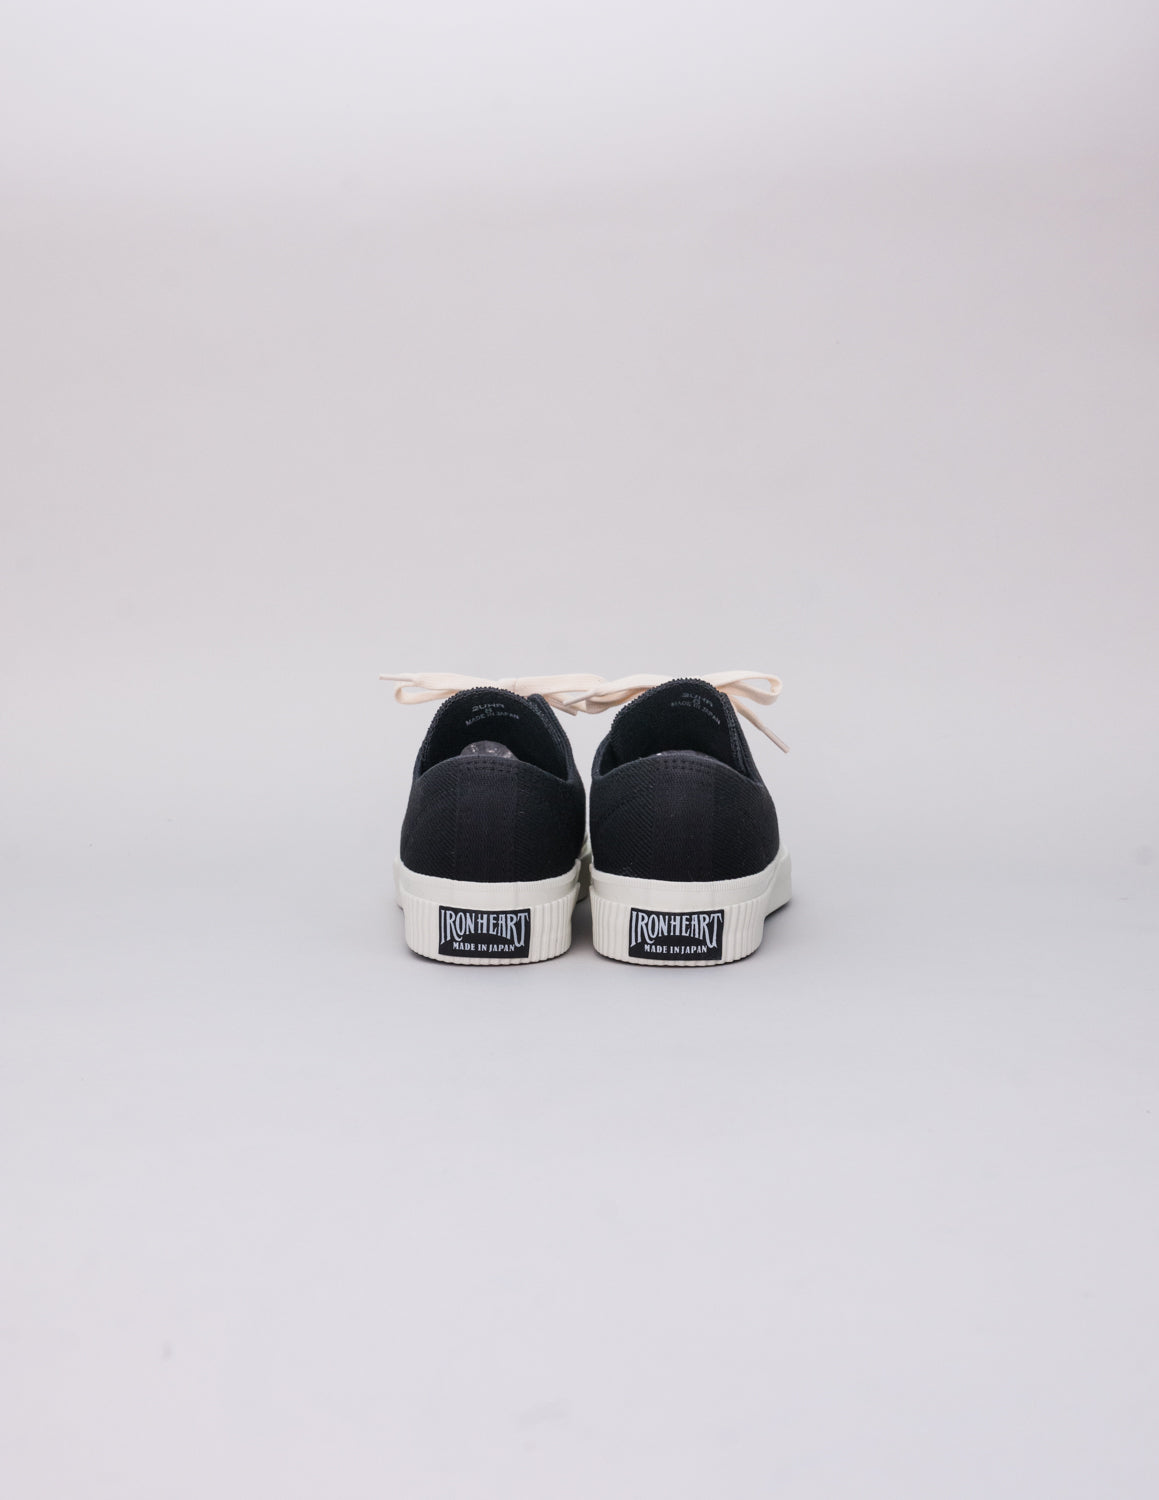 IHSN-01-BLK - 21oz Non-Fade Denim Low-Top Sneakers - Superblack